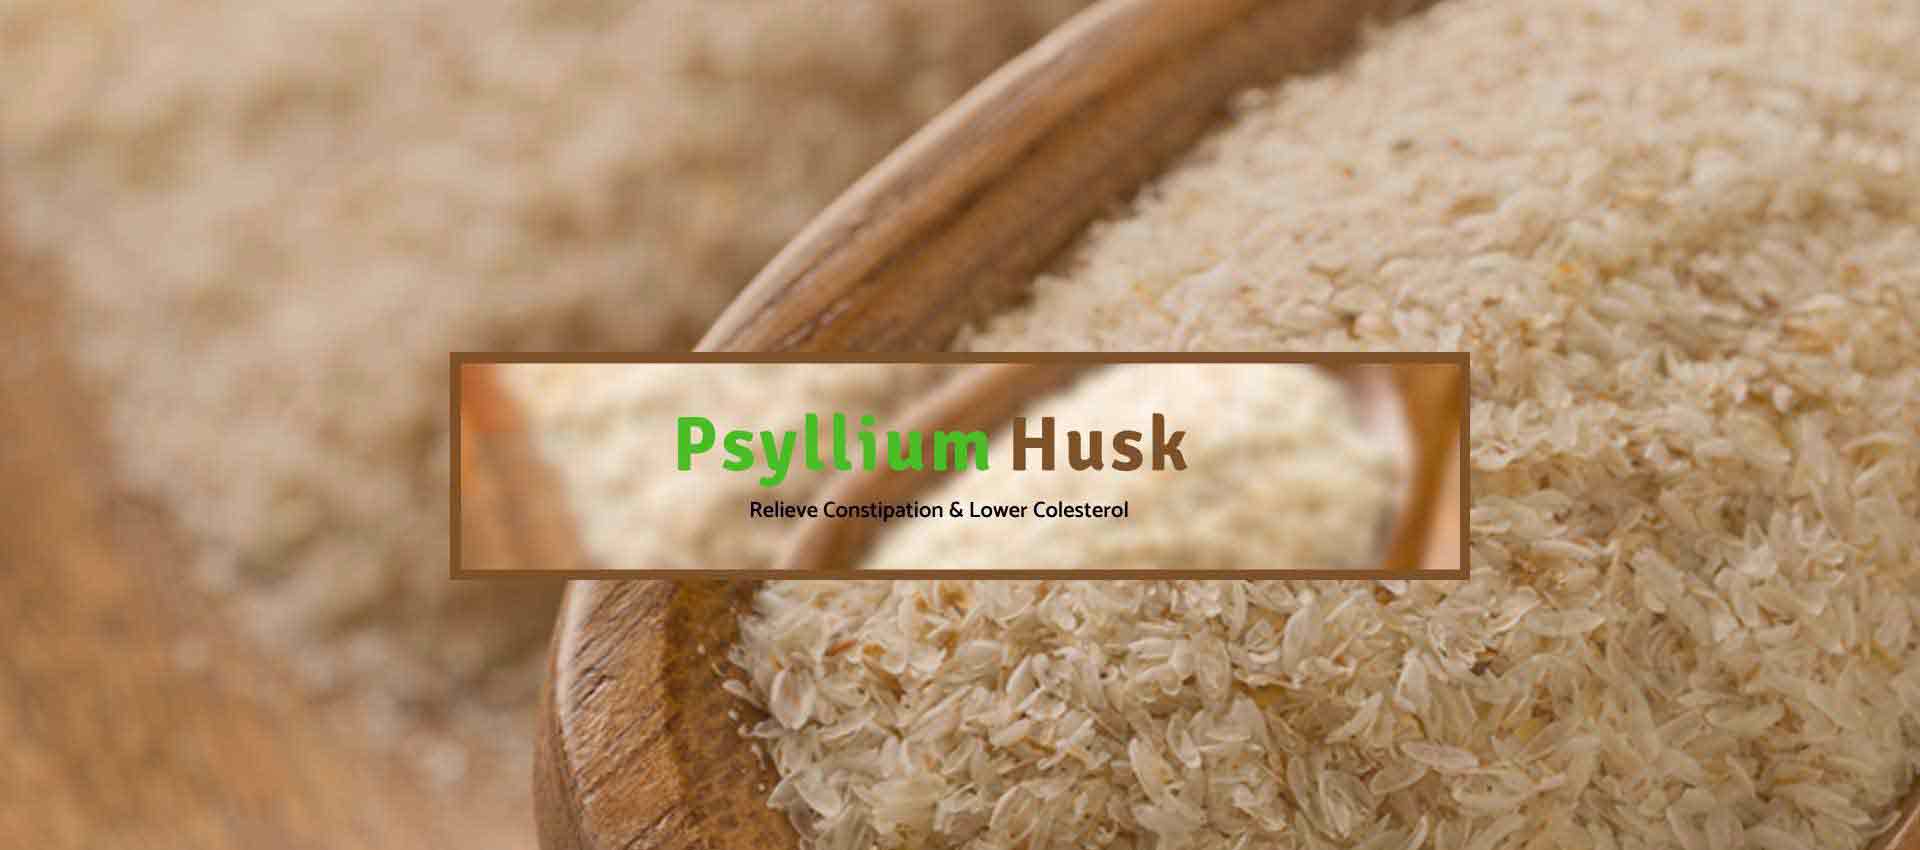 Psyllium Husk Manufacturers in China